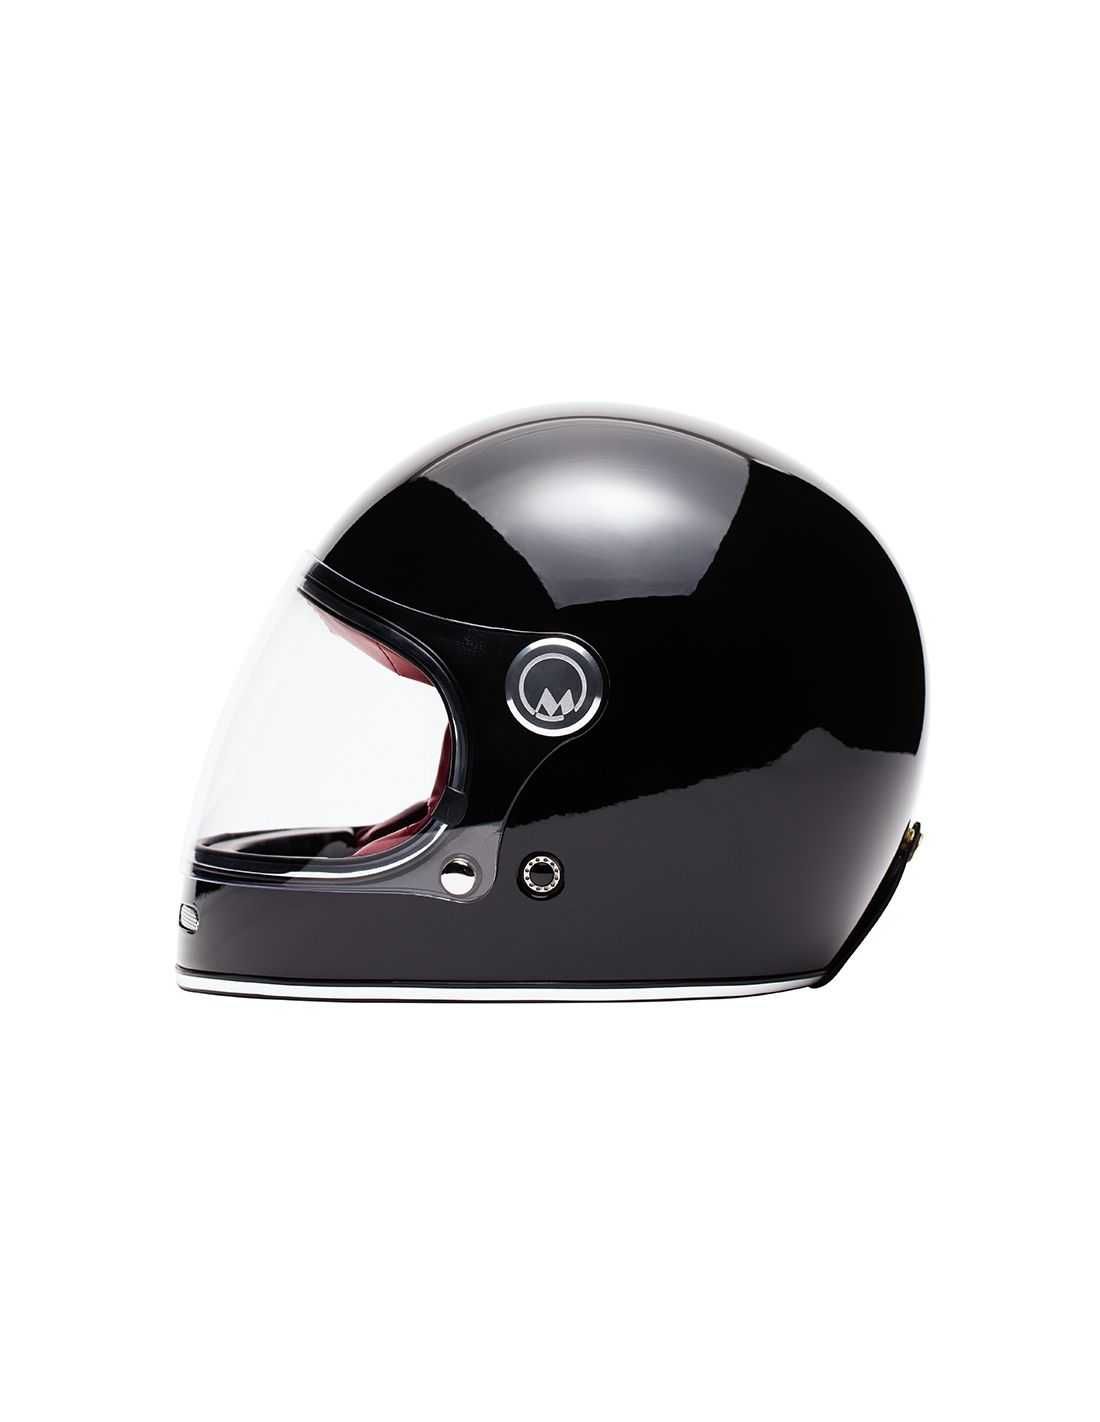 Full Moon Classic Rider motorcycle helmet - Mârkö Helmets